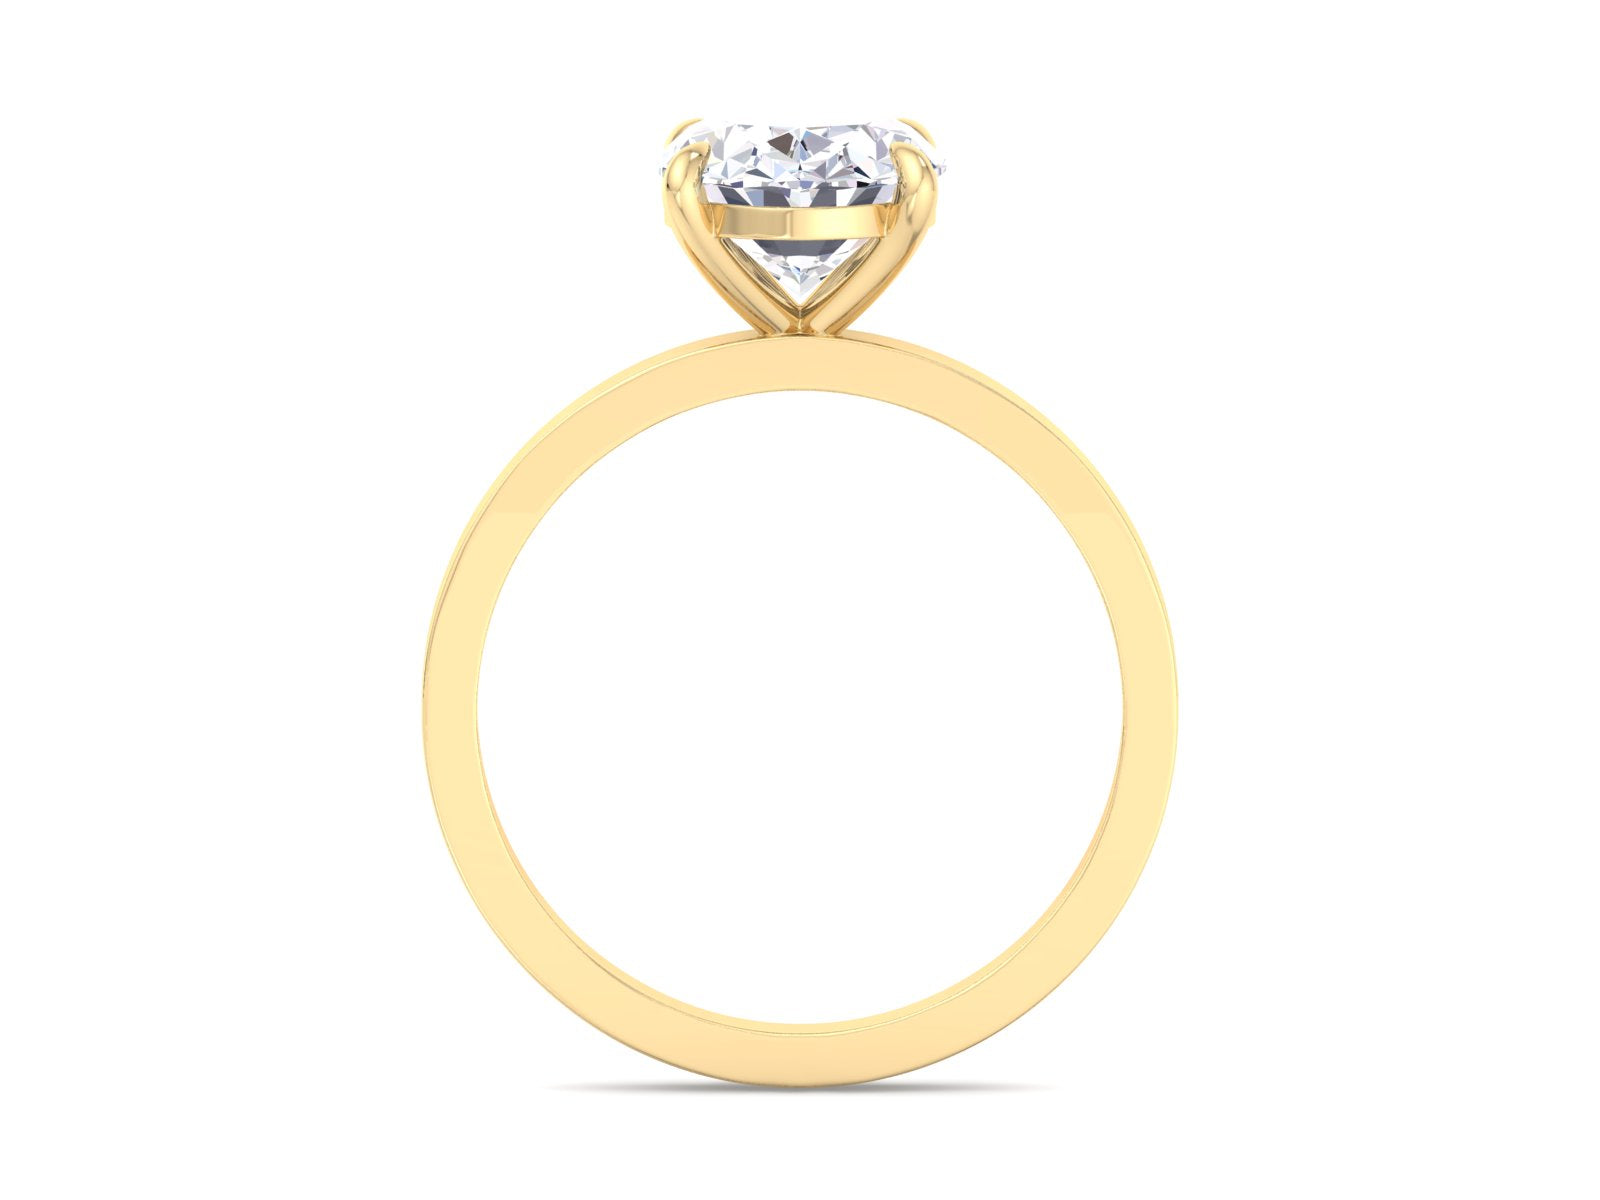 Minimalist diamond Engagement Rings For Women